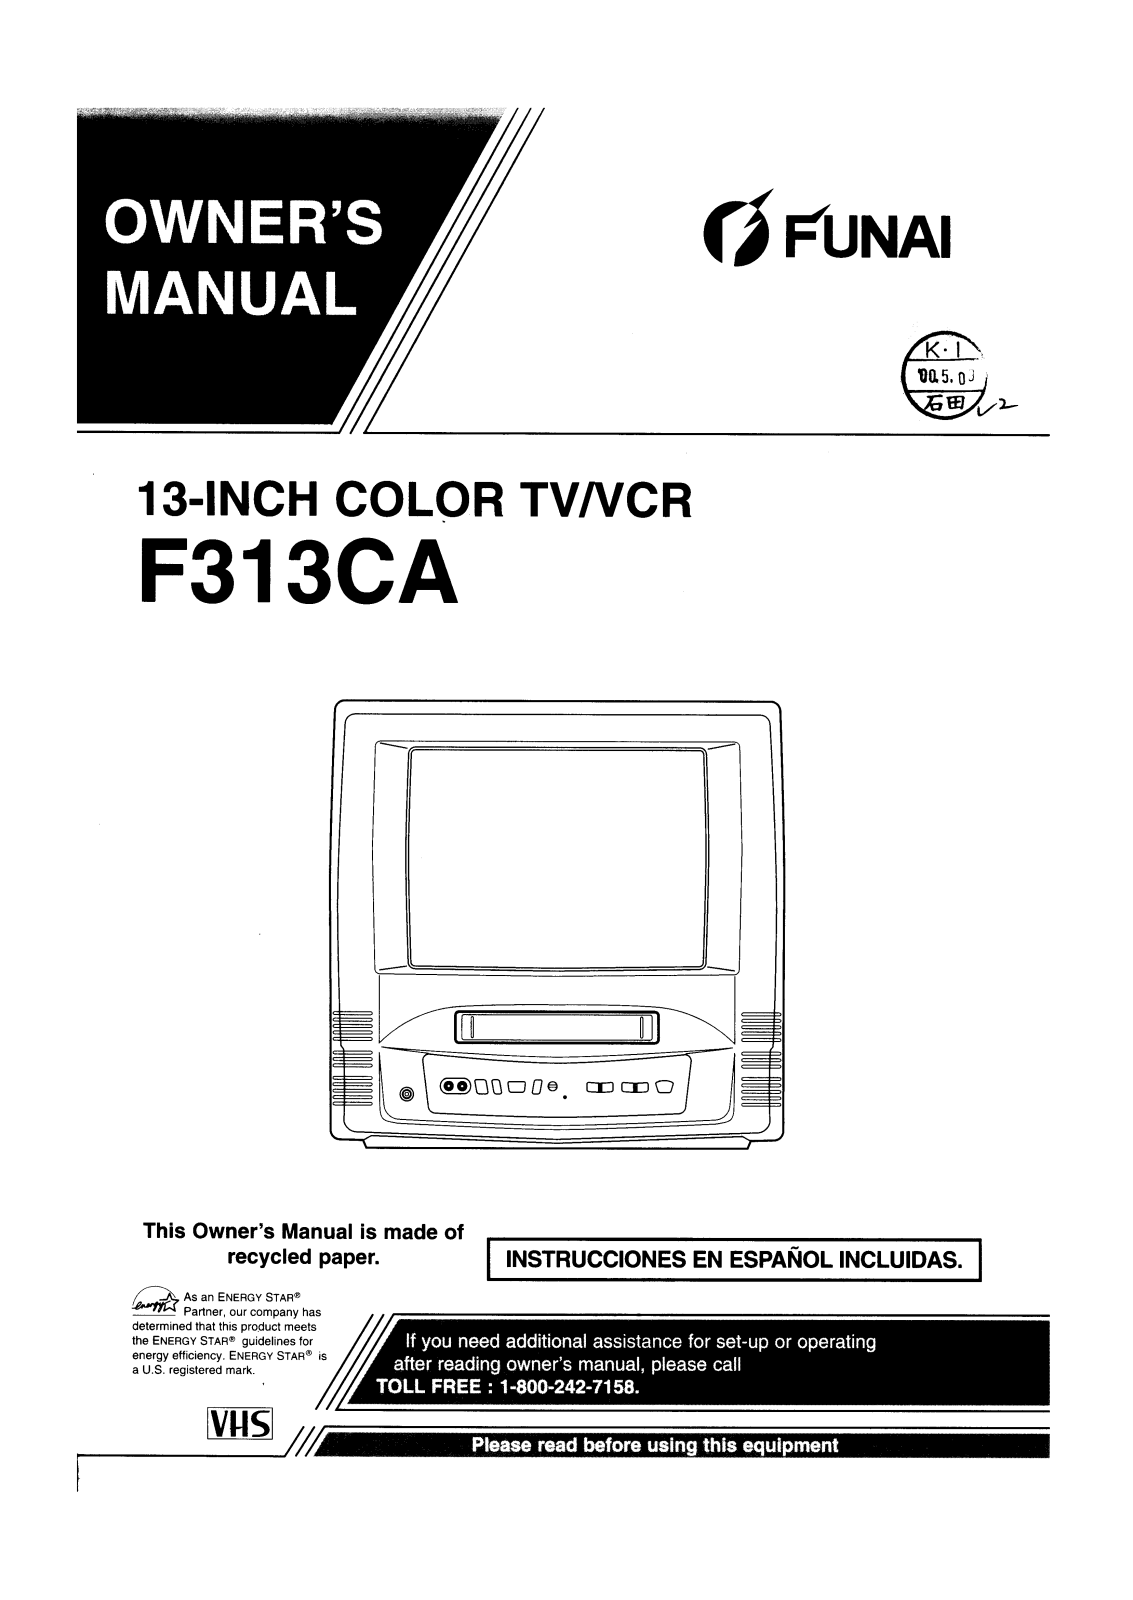 Funai F313CA User Manual